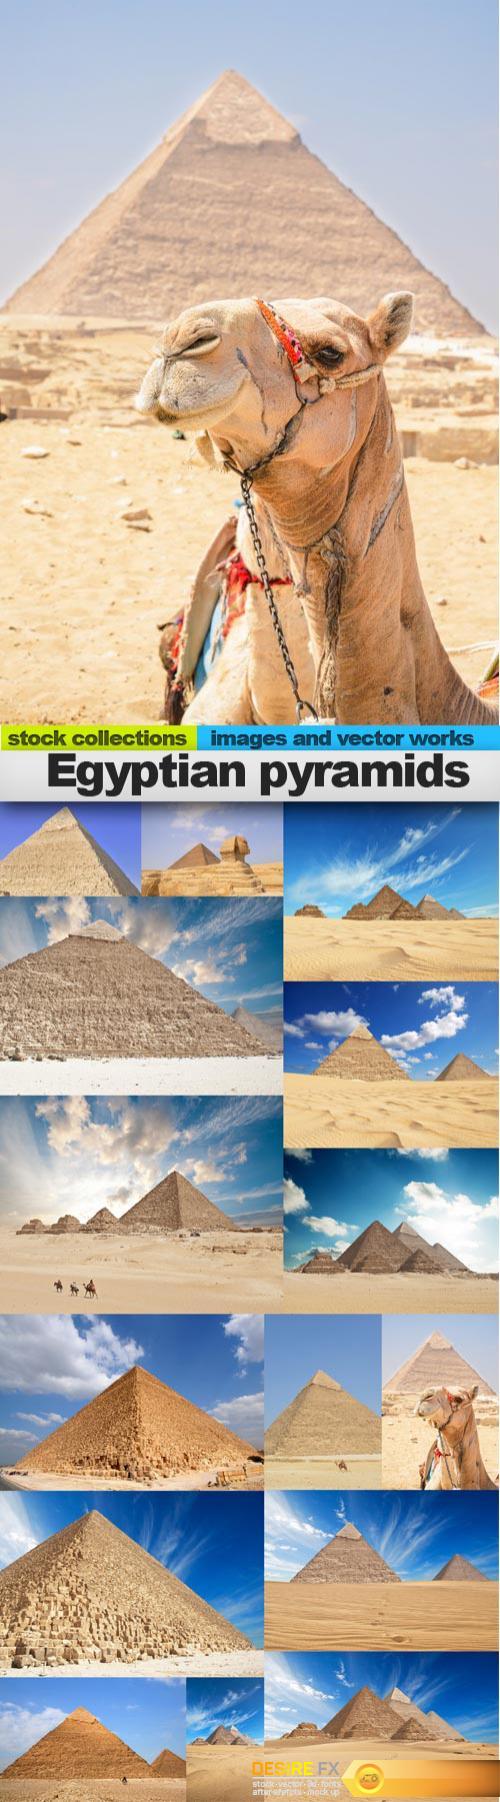 Egyptian pyramids, 15 x UHQ JPEG